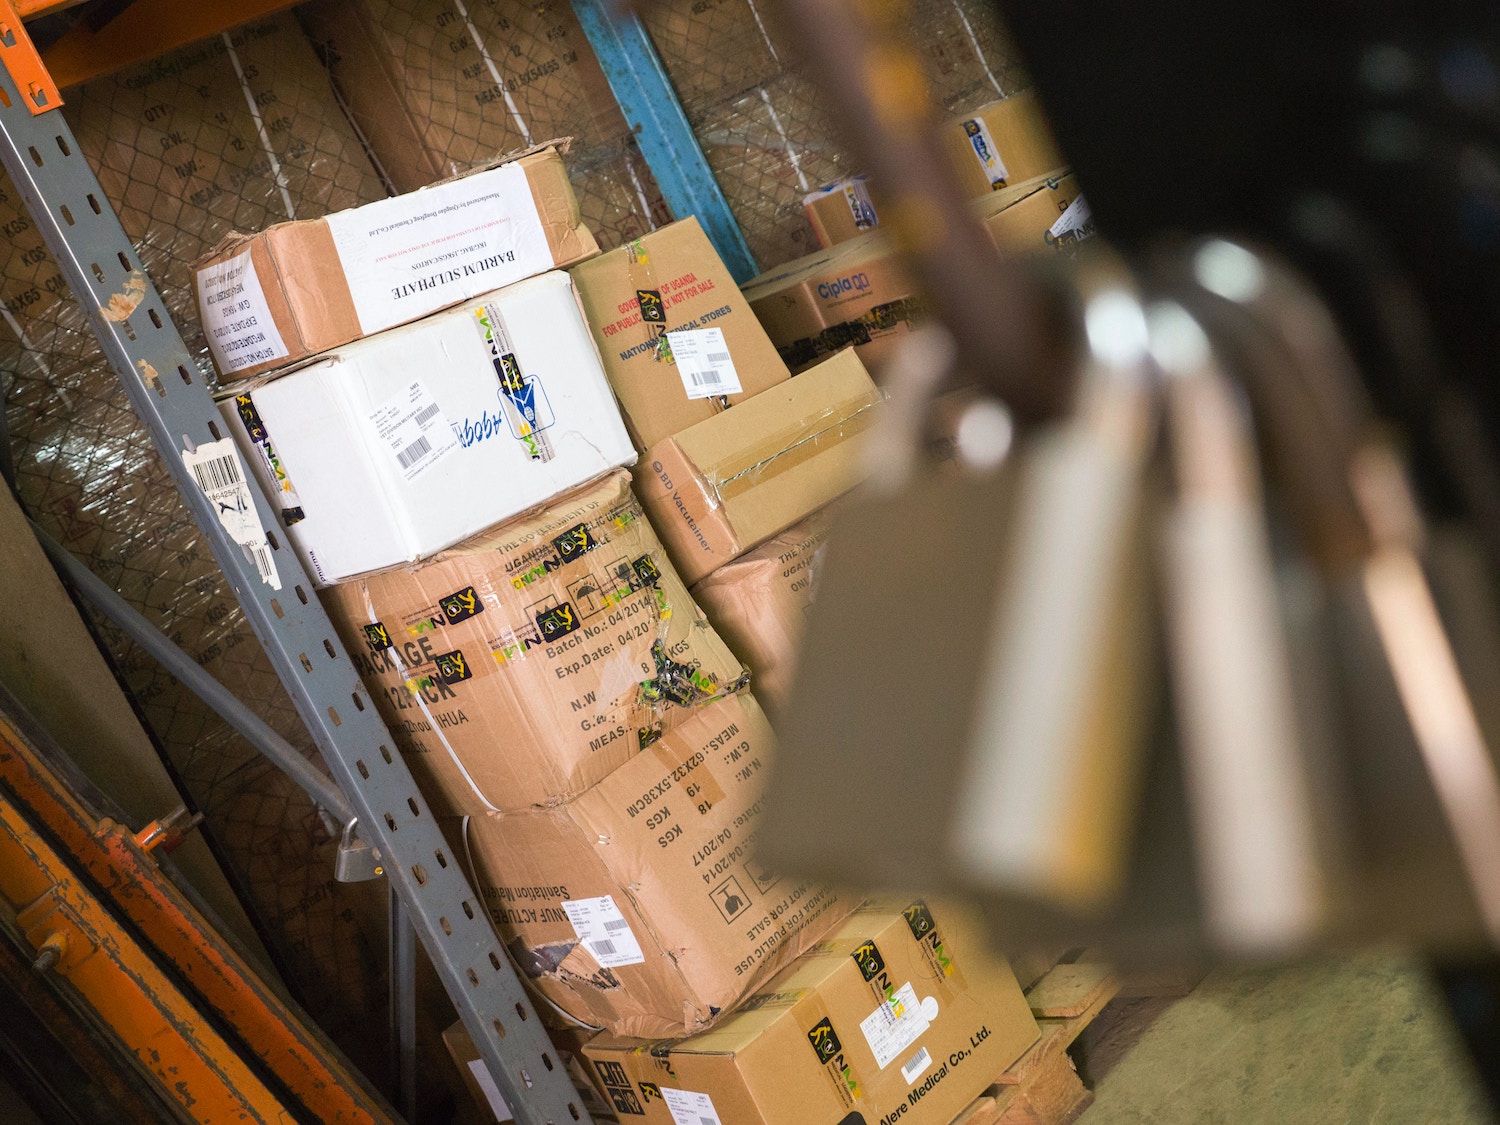 Inventory organization ideas to streamline warehouse operations